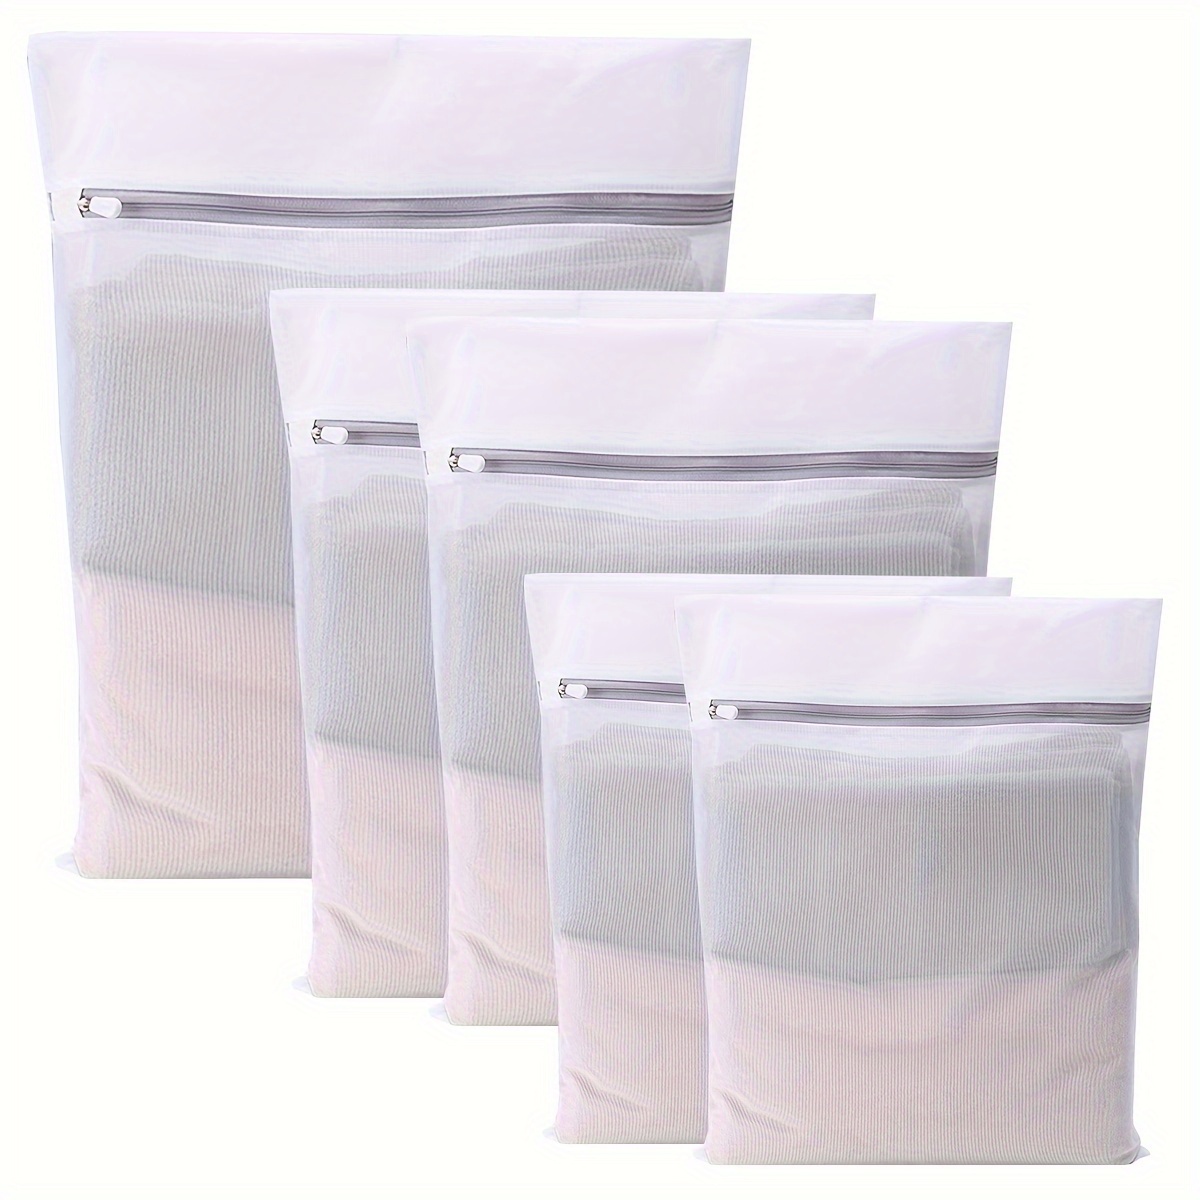 Bra Mesh Laundry Bag, 3PCS Large Washing Machine Bag Durable Lingerie Fine  Mesh Wash Bag with Zip Closure for Bra, Underwear, Delicates, Socks (White)  : : Home & Kitchen